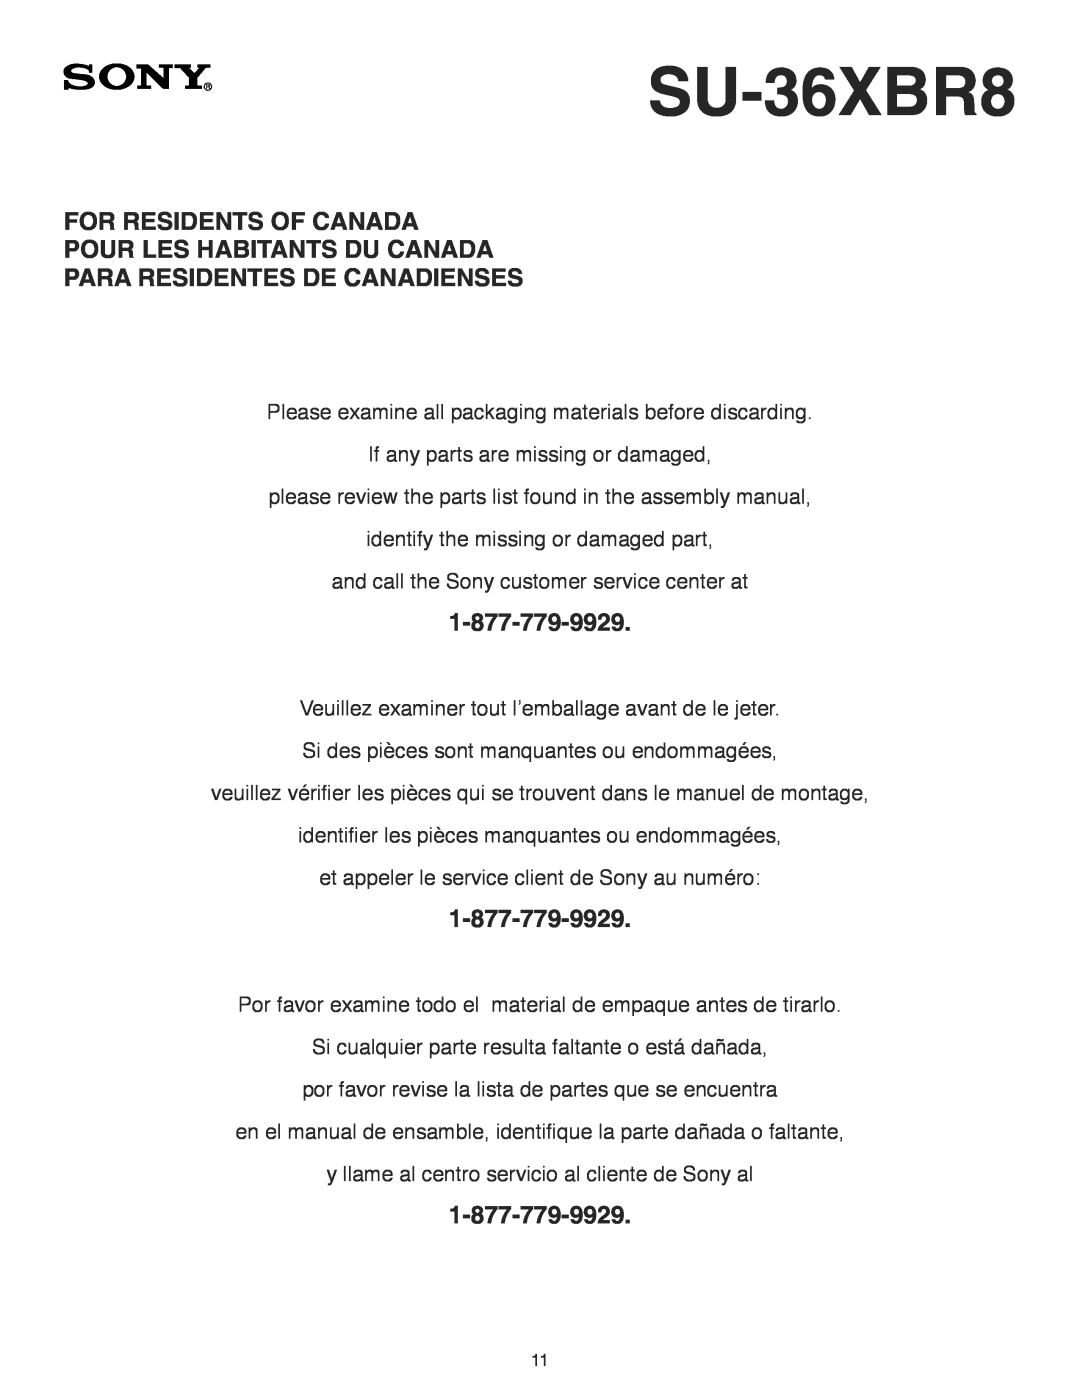 Sony SU-36XBR8 manual For Residents Of Canada, Pour Les Habitants Du Canada, Para Residentes De Canadienses 